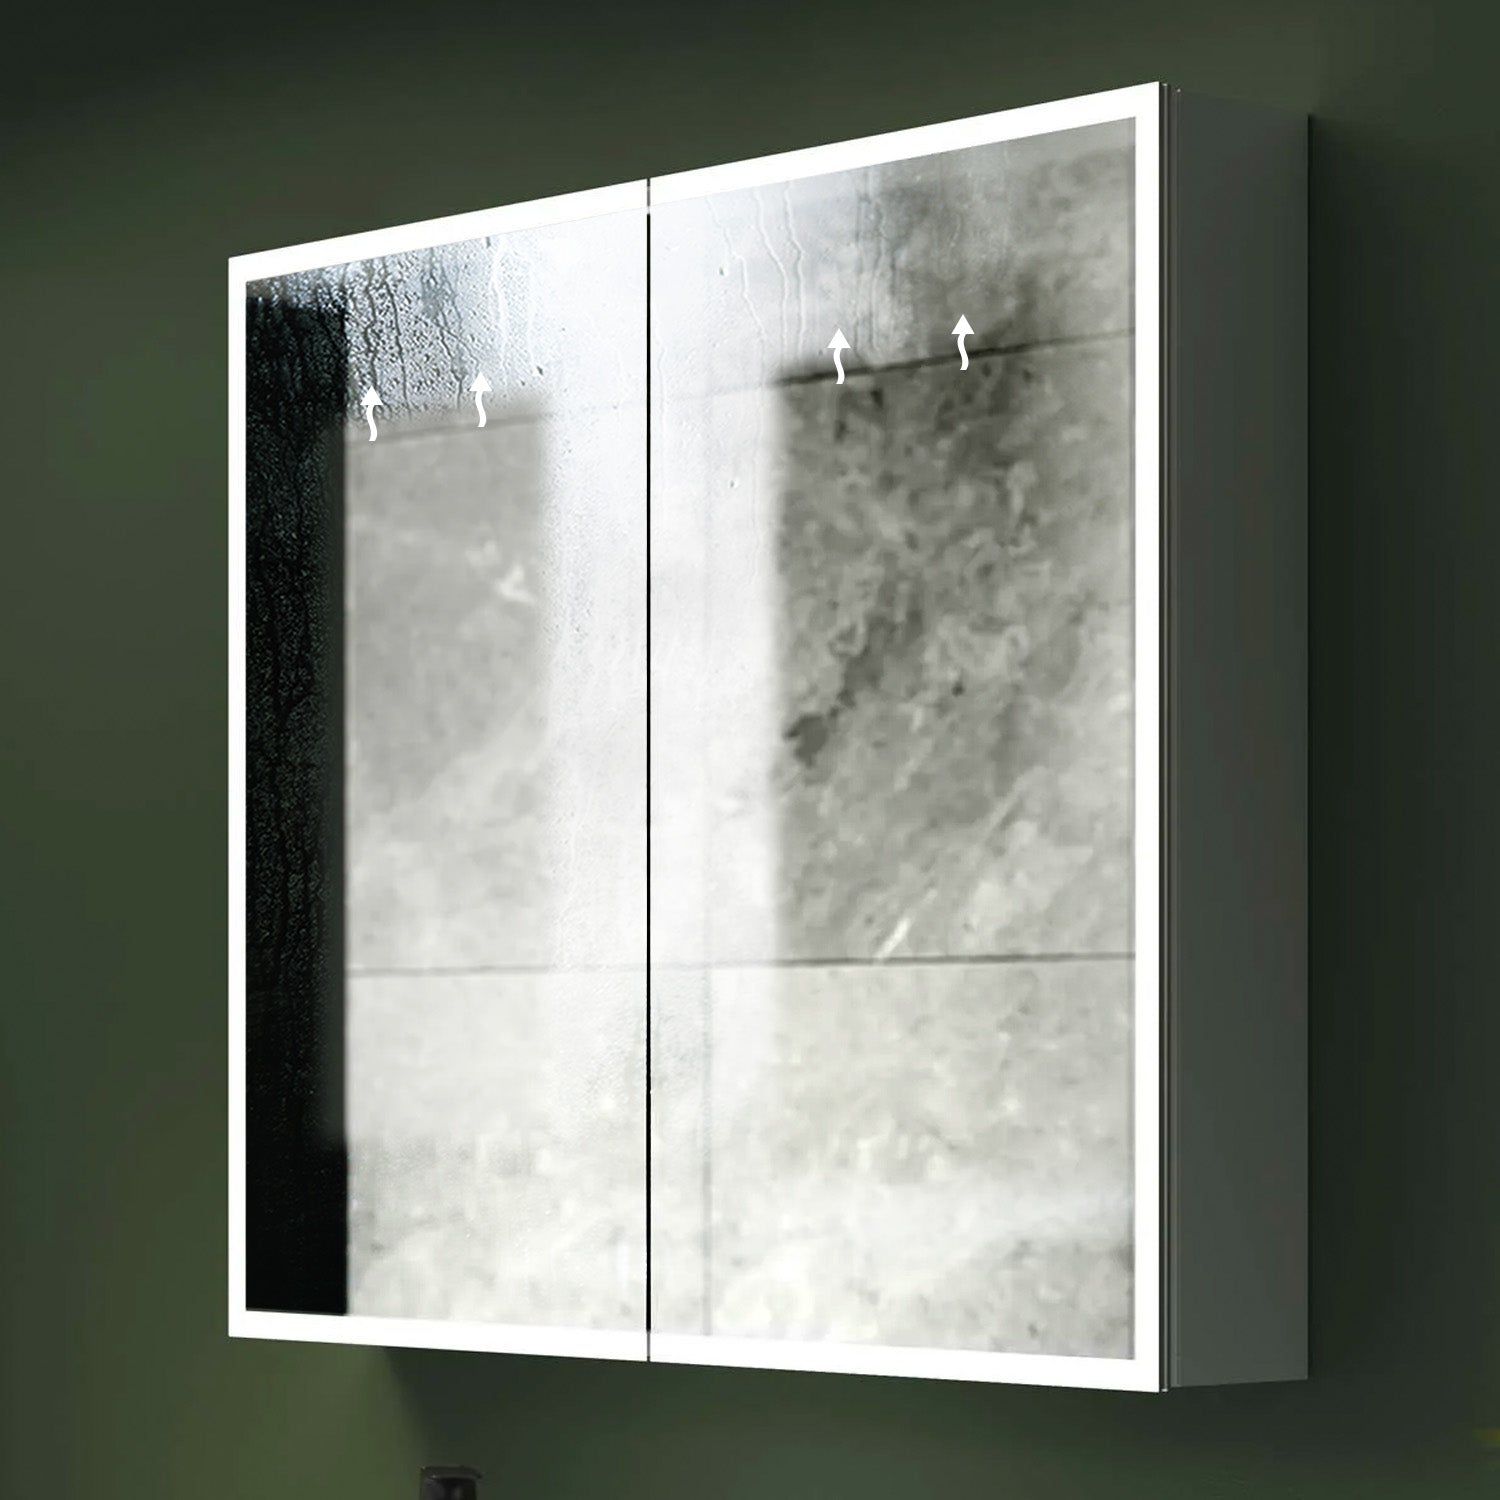 Marcel LED Bathroom Mirror Cabinet #size_815mm-x-700mm